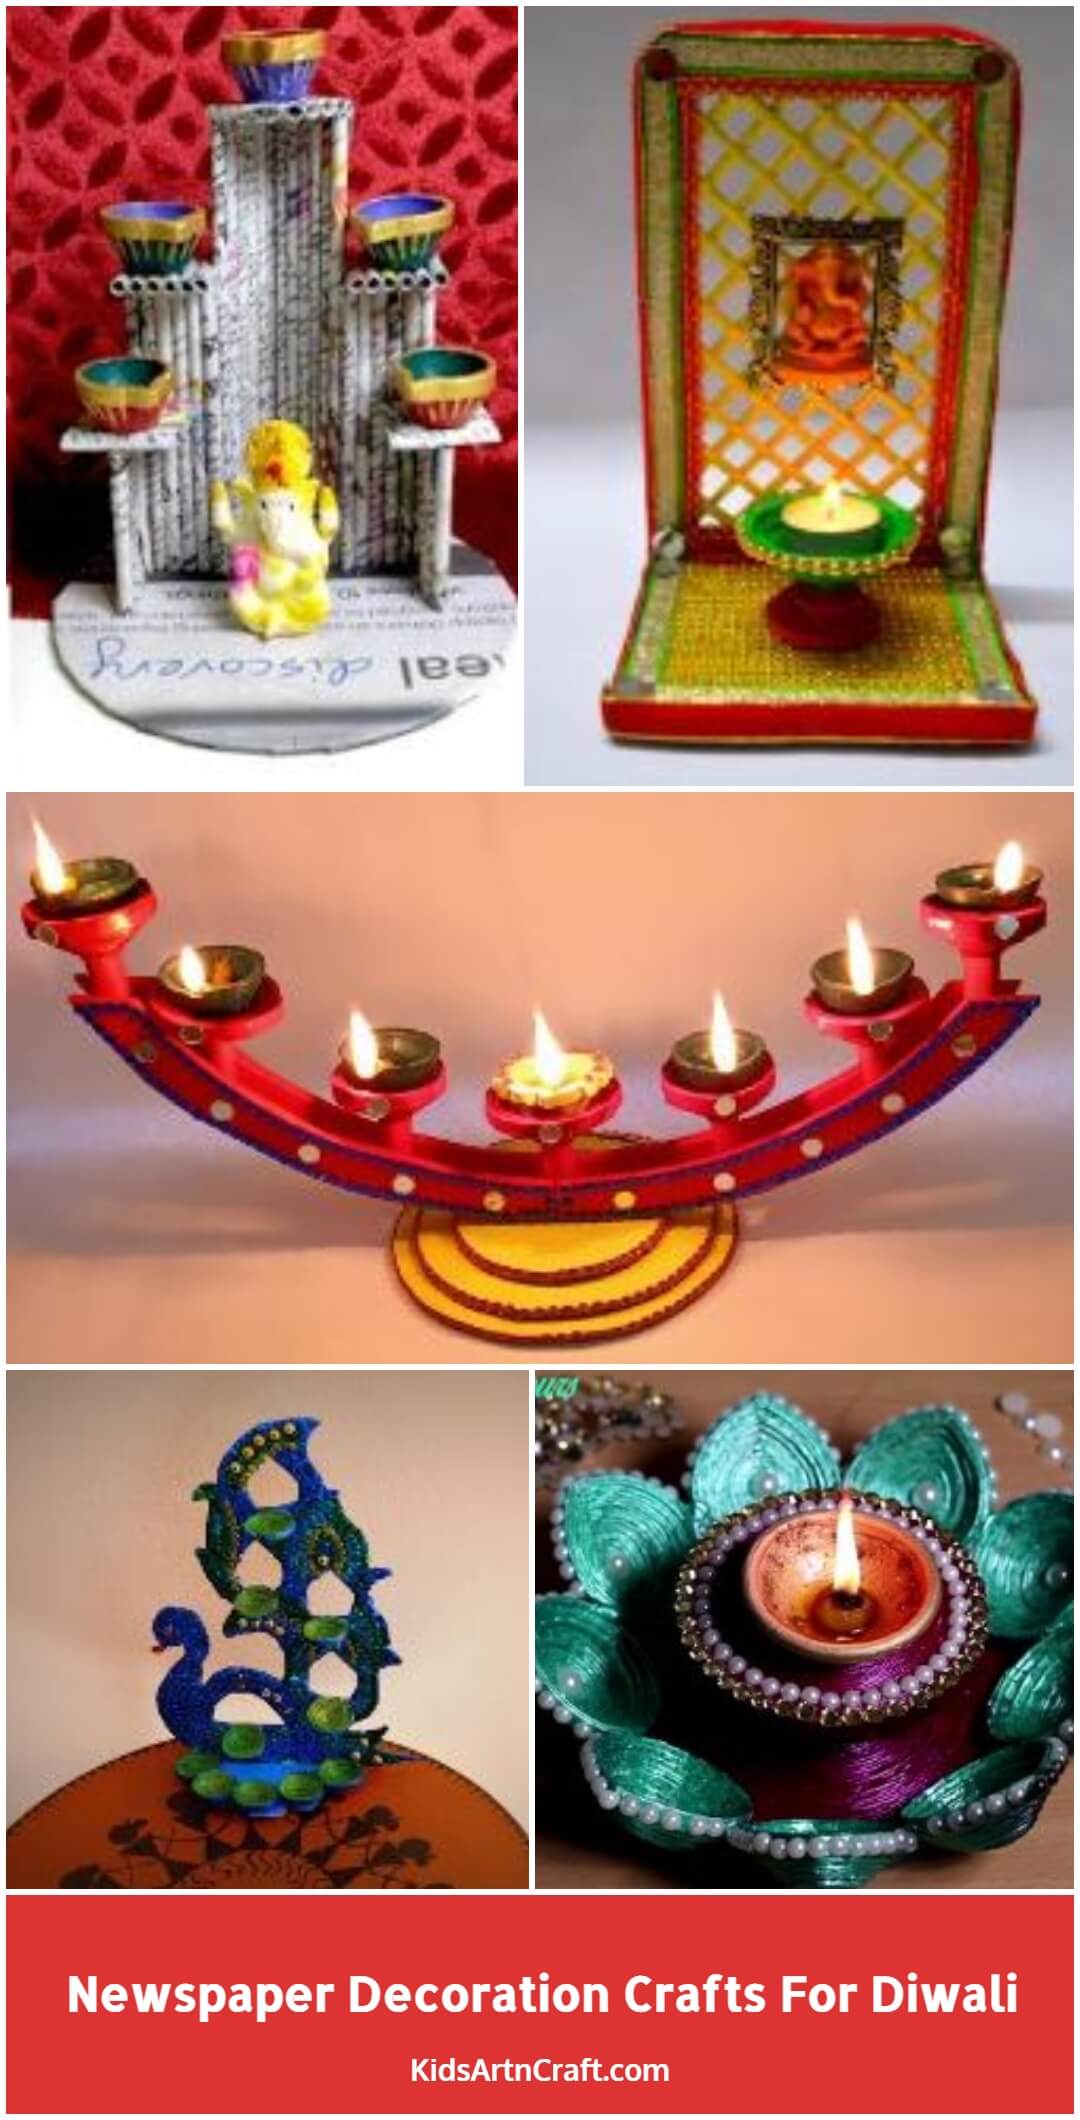 Newspaper Decoration Crafts For Diwali